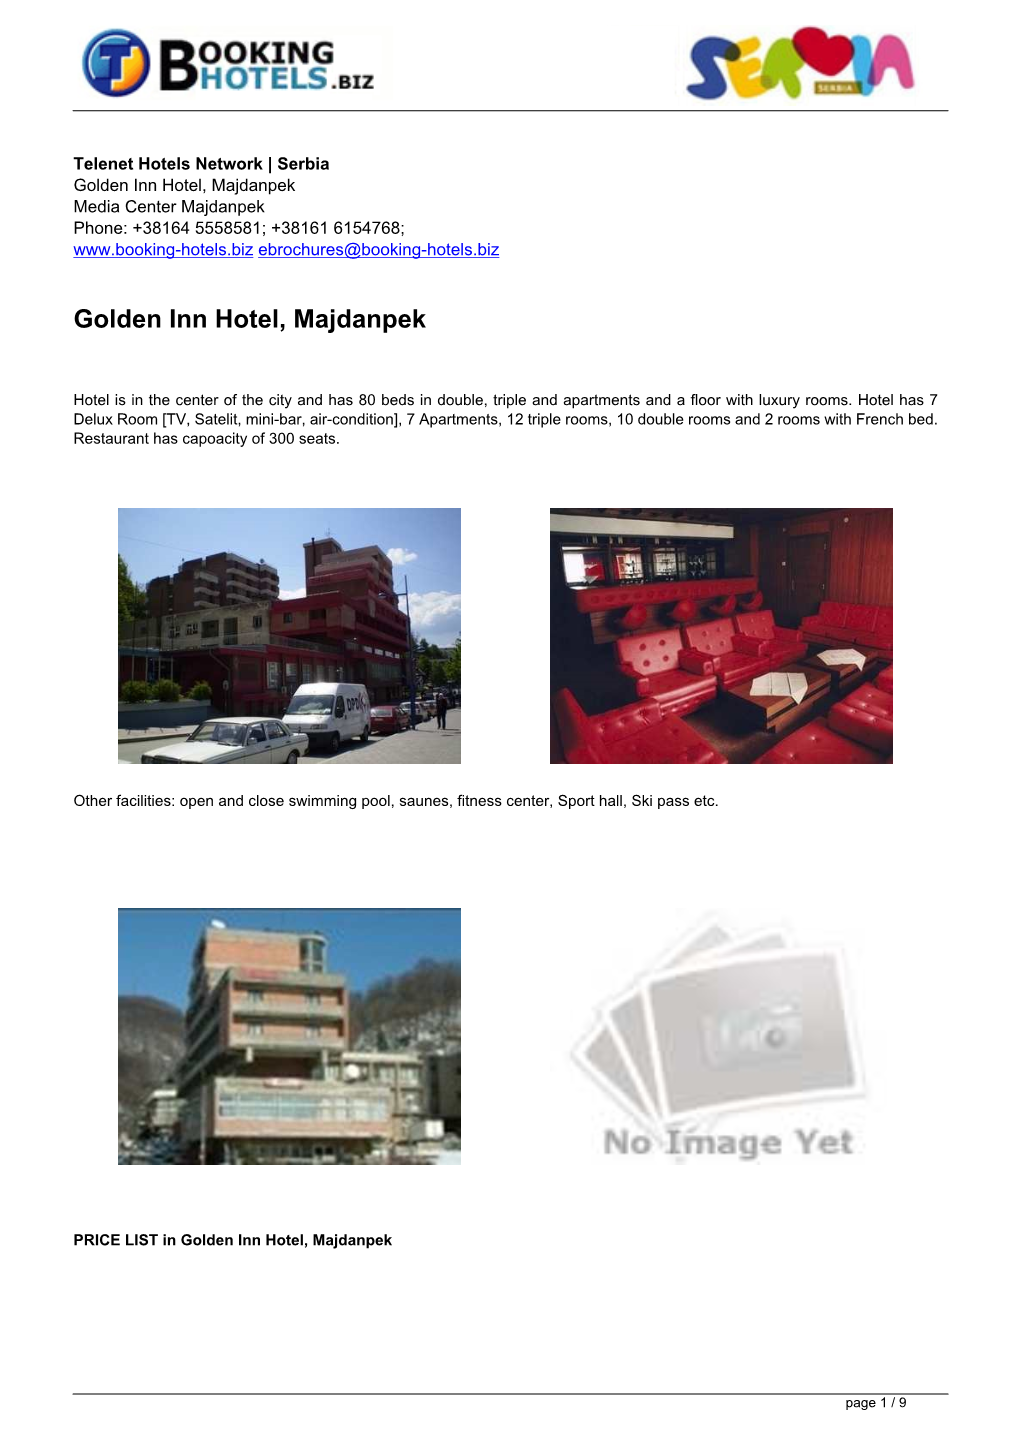 Golden Inn Hotel, Majdanpek Media Center Majdanpek Phone: +38164 5558581; +38161 6154768; Ebrochures@Booking-Hotels.Biz